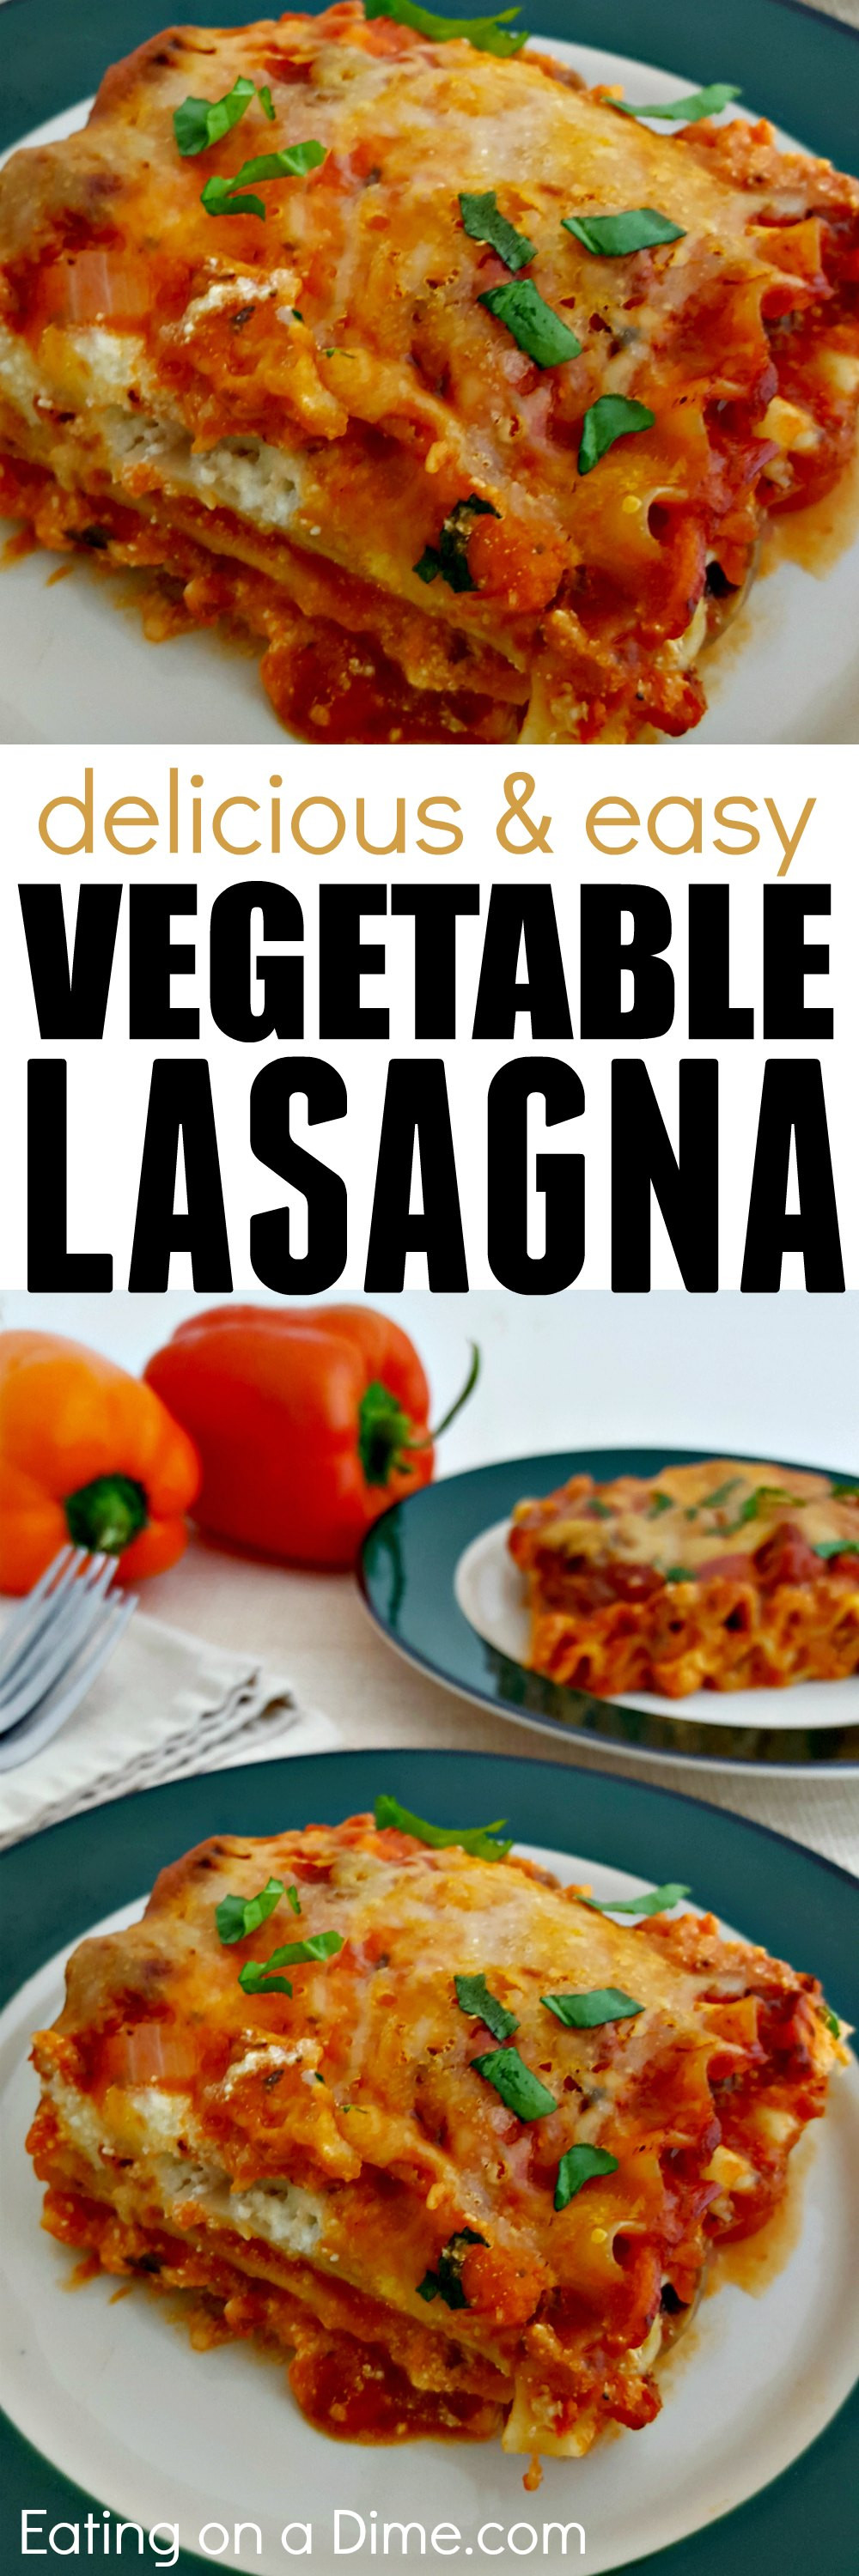 Quick Lasagna Recipe
 Easy Ve arian Lasagna Recipe Meatless Lasagna Everyone